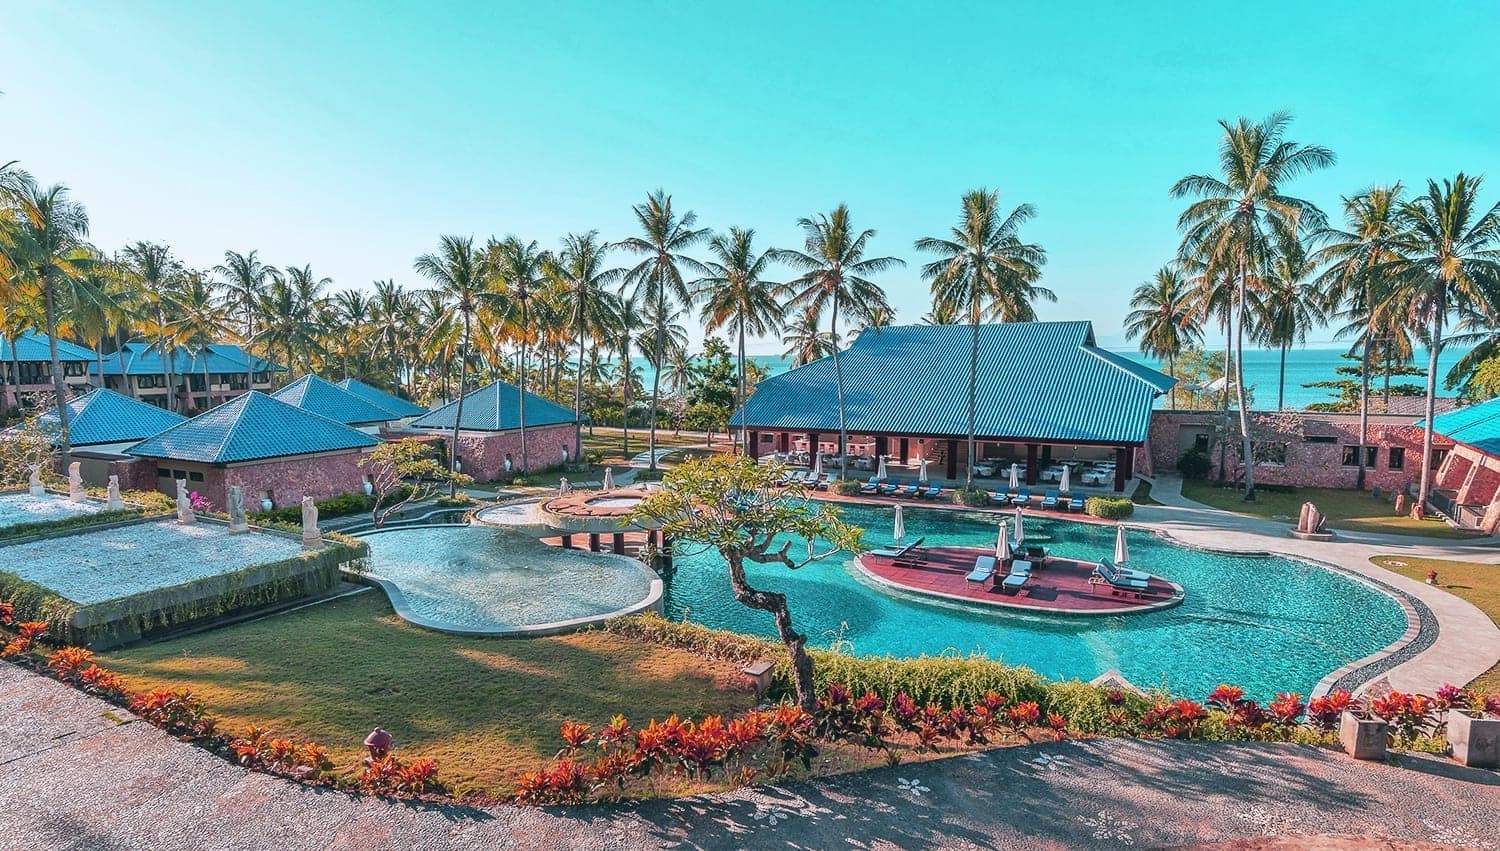 wyndham sundancer resort lombok